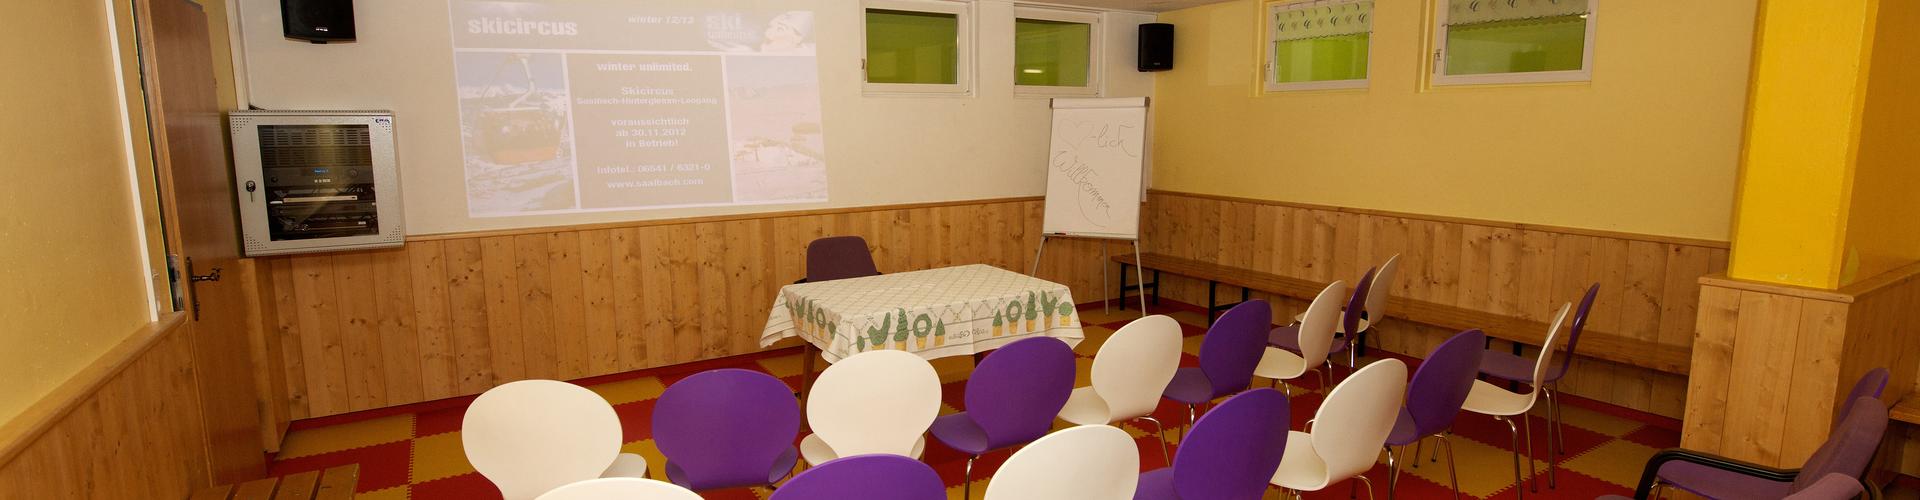 Vortragssaal im Jugendferienhaus Salitererhof Saalbach Hinterglemm